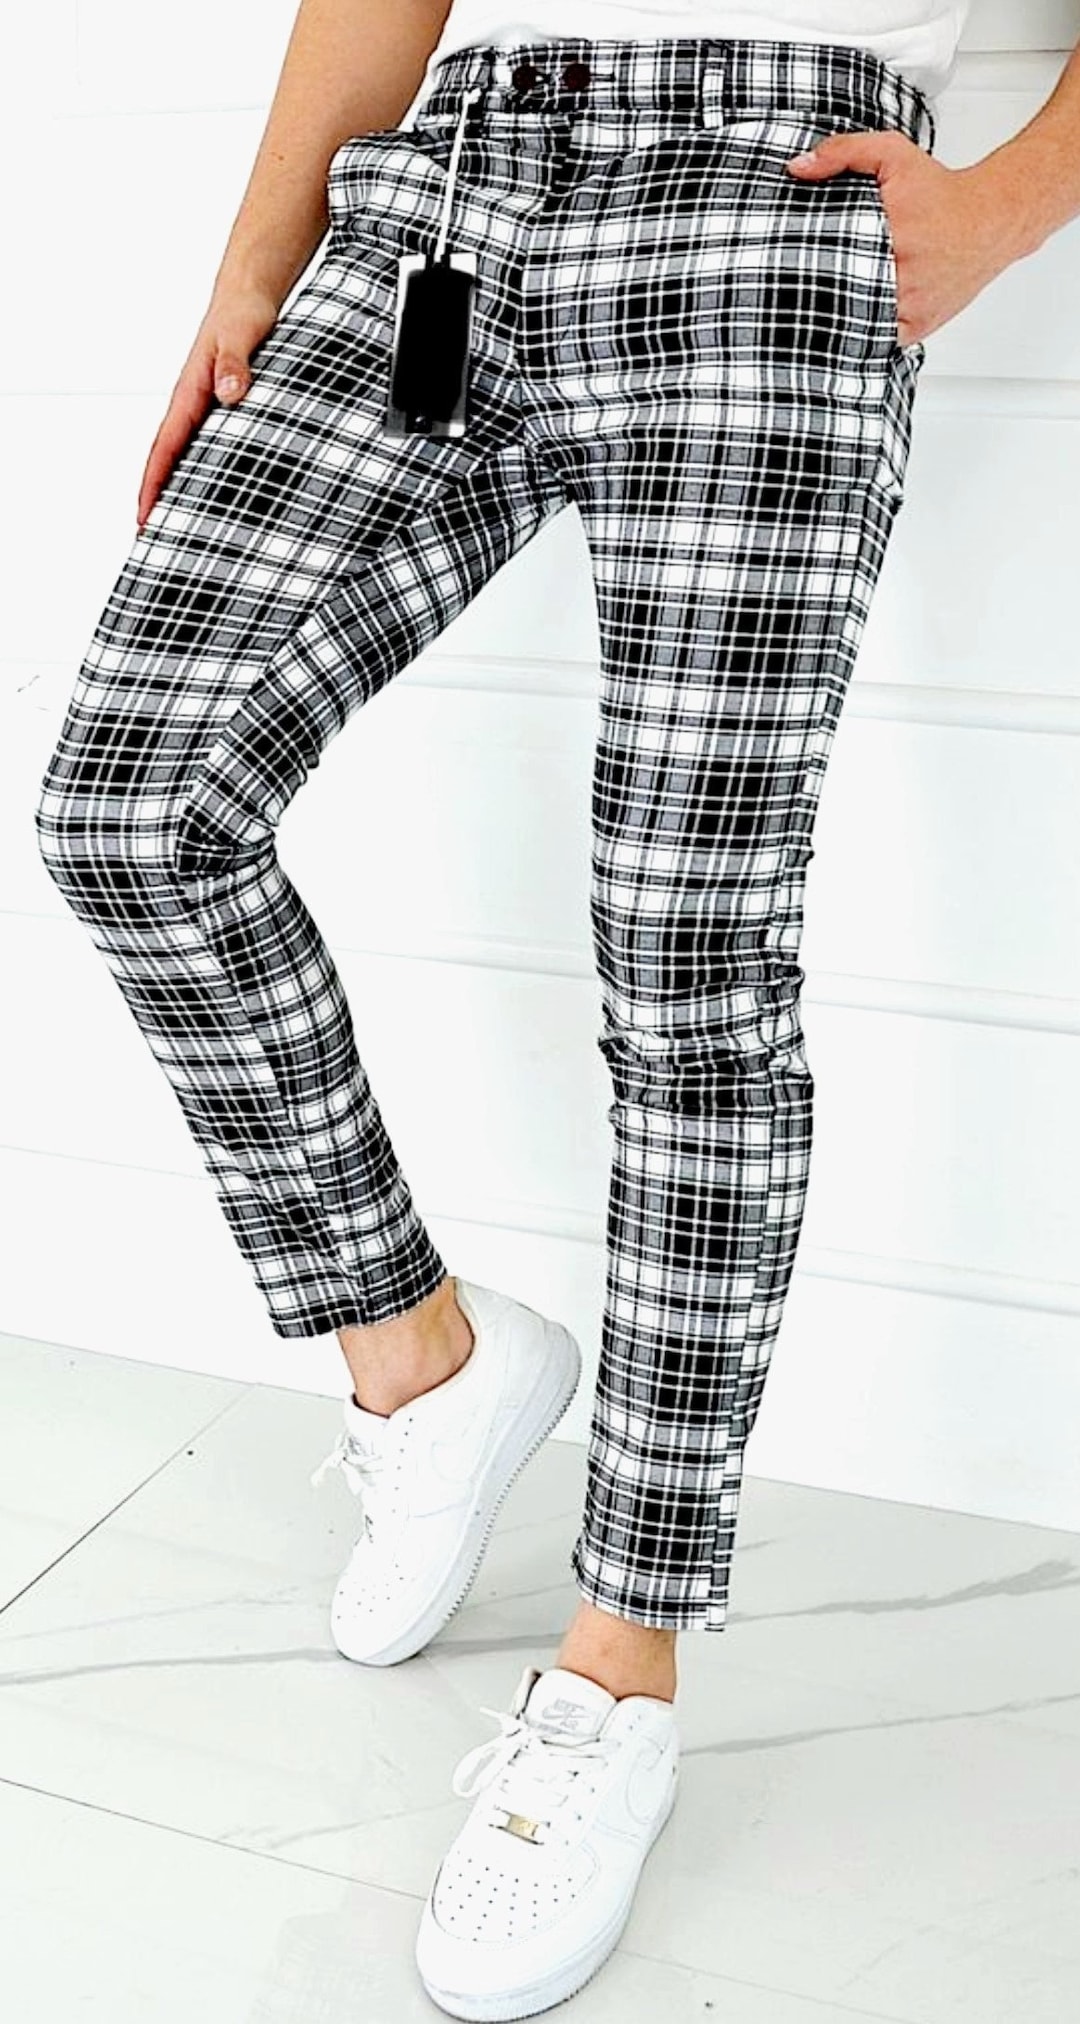 Plus Size Plaid Pants Outfit Ideas - Alexa Webb